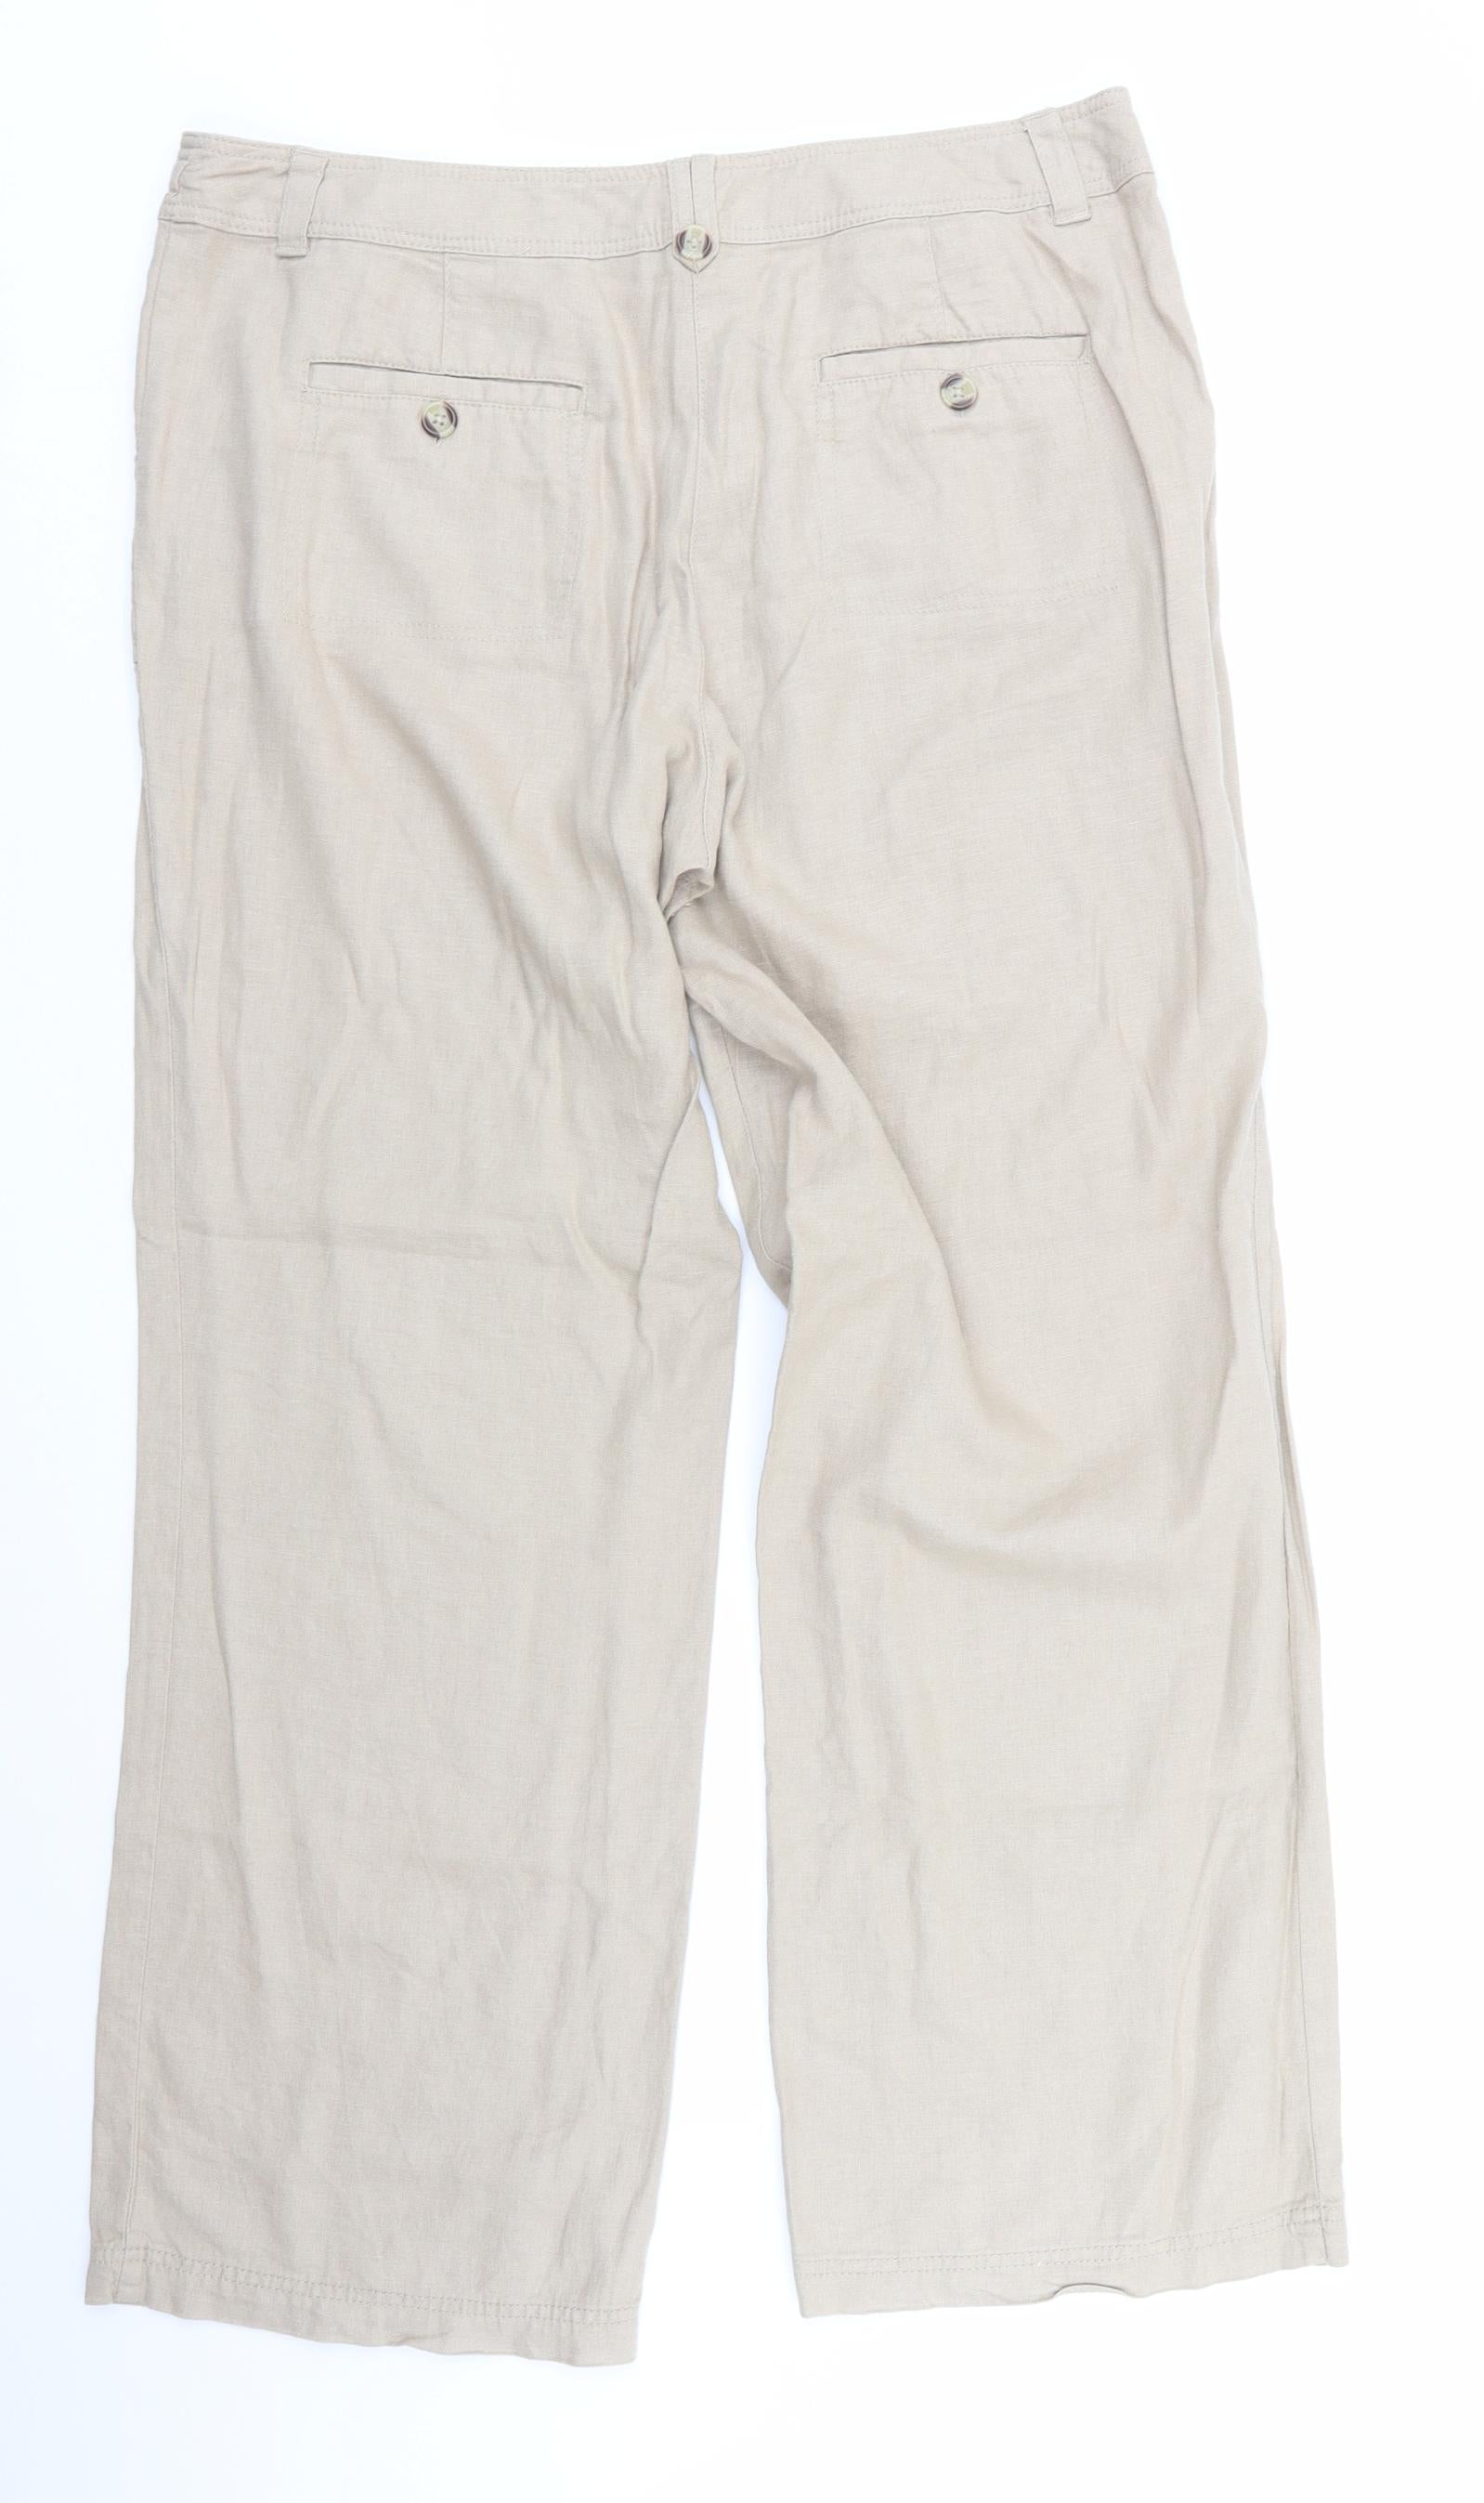 Debenhams Ladies Linen Trouser Size 14S  eBay